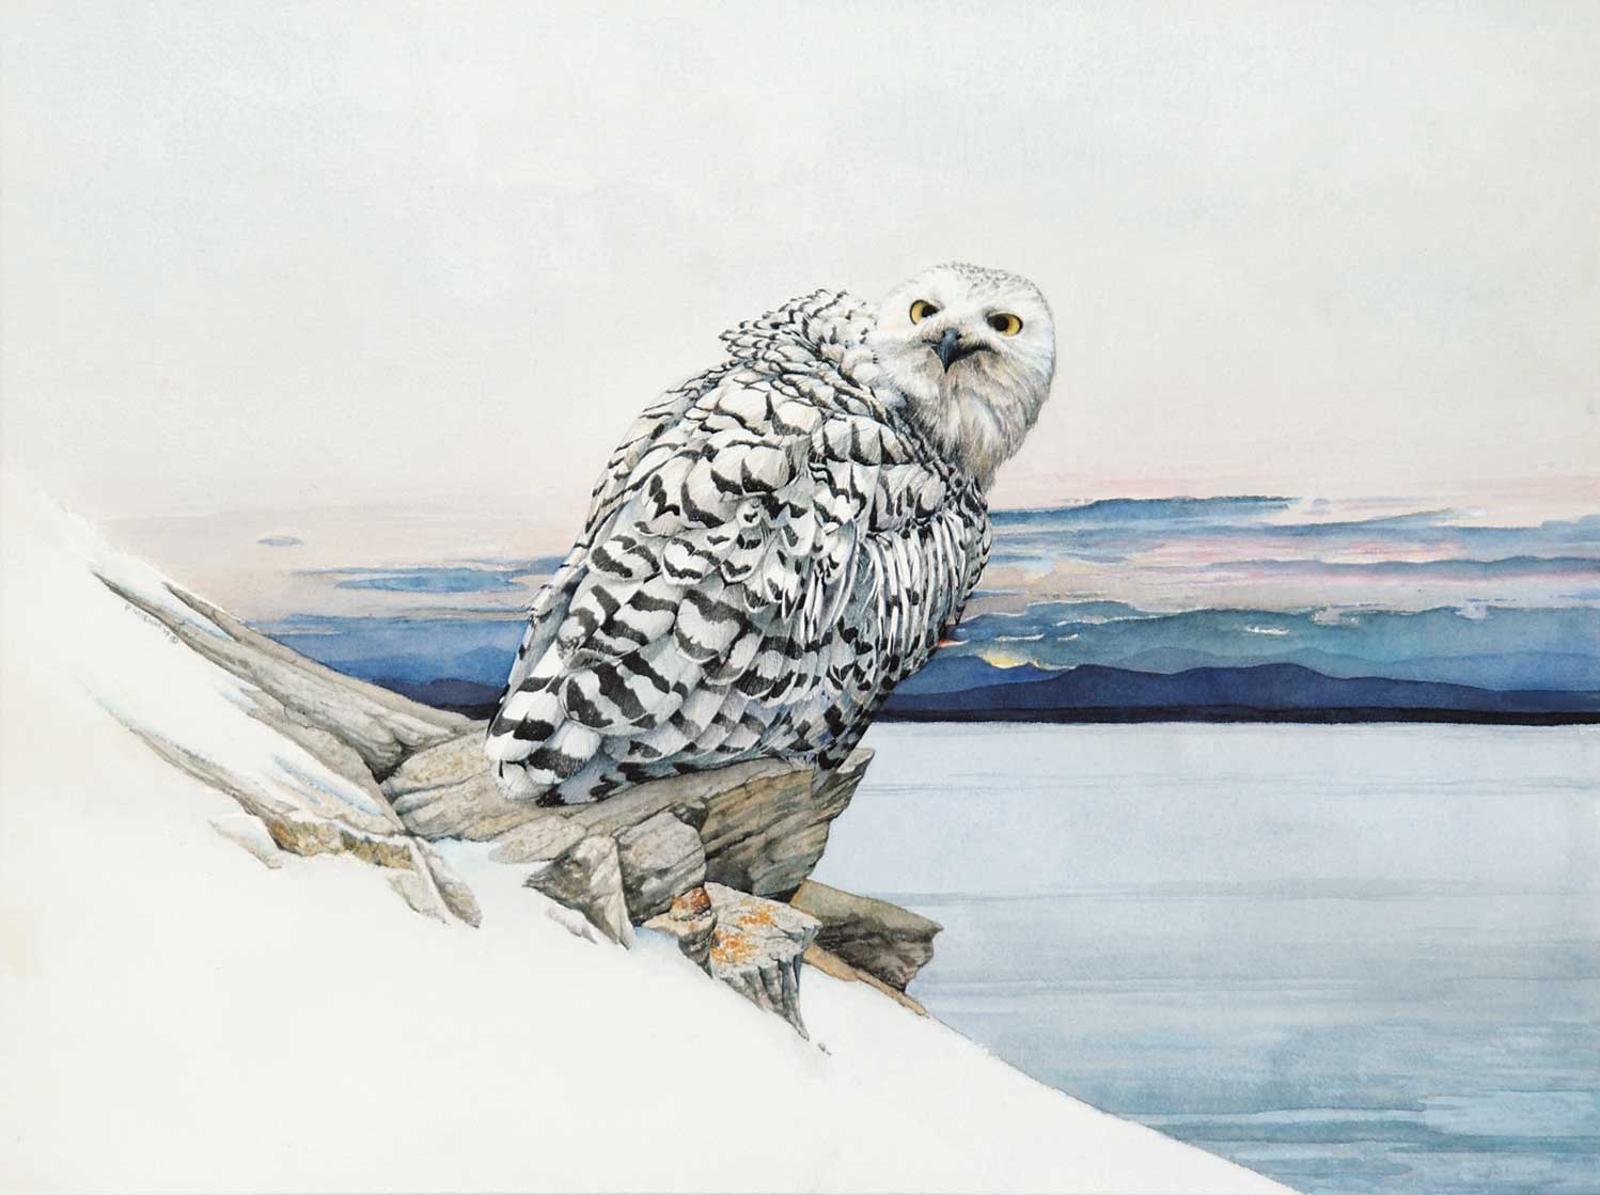 Peter Miehm - Snowy Owl